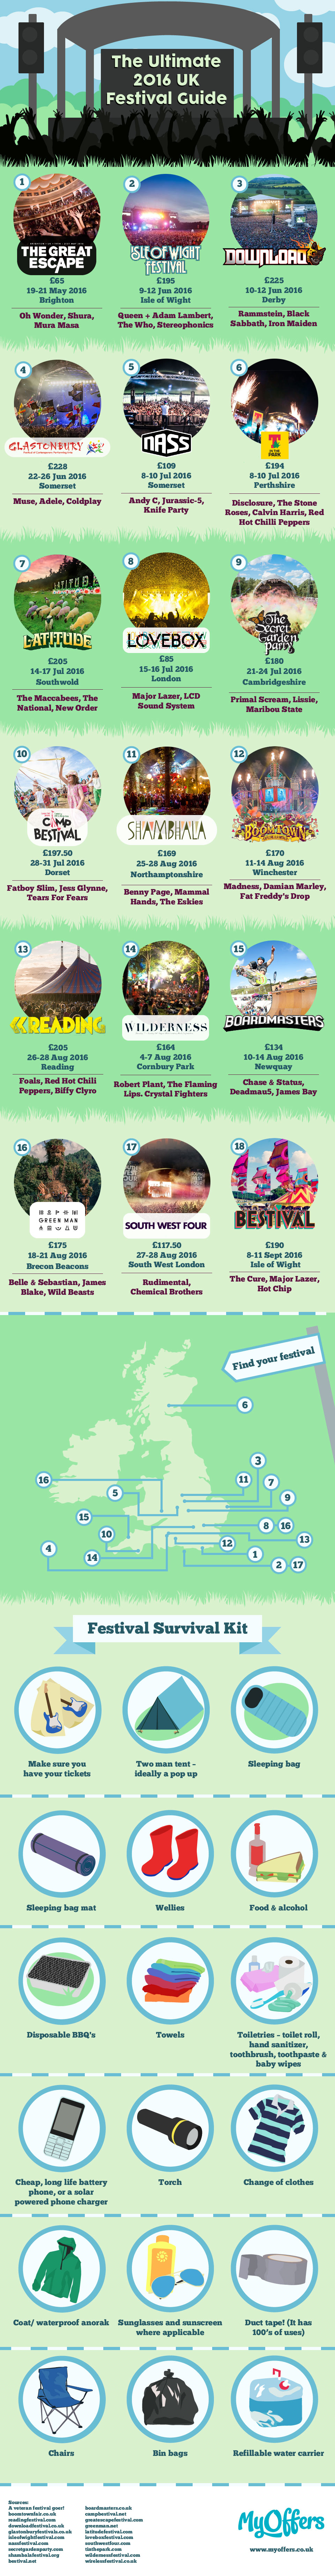 The Ultimate 2016 UK Festival Guide